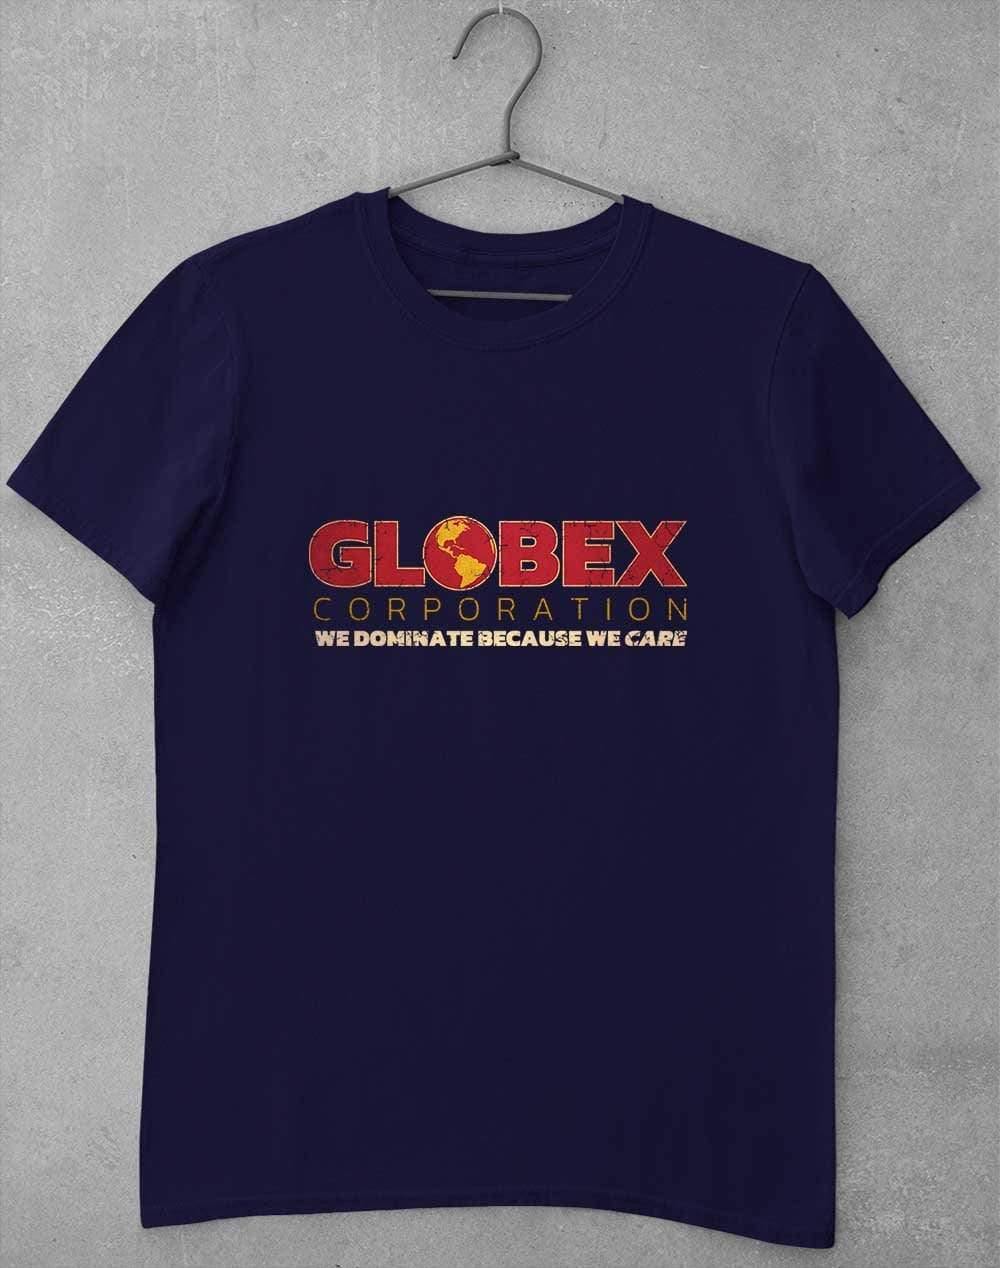 Globex Corporation T-Shirt S / Navy  - Off World Tees